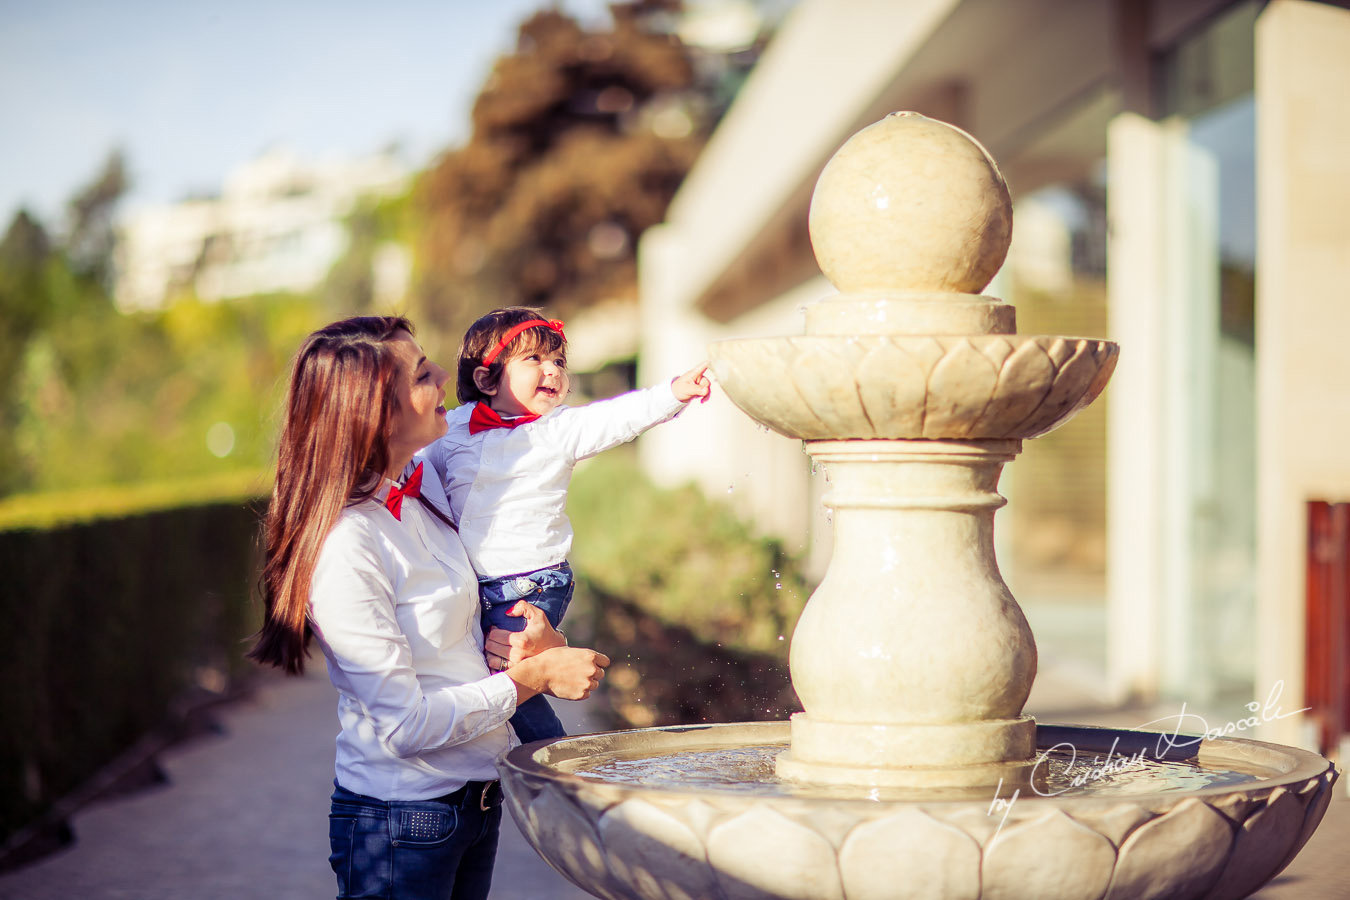 Family Photos in Cyprus , 4 Seasons, Limassol. Photographer: Cristian Dascalu